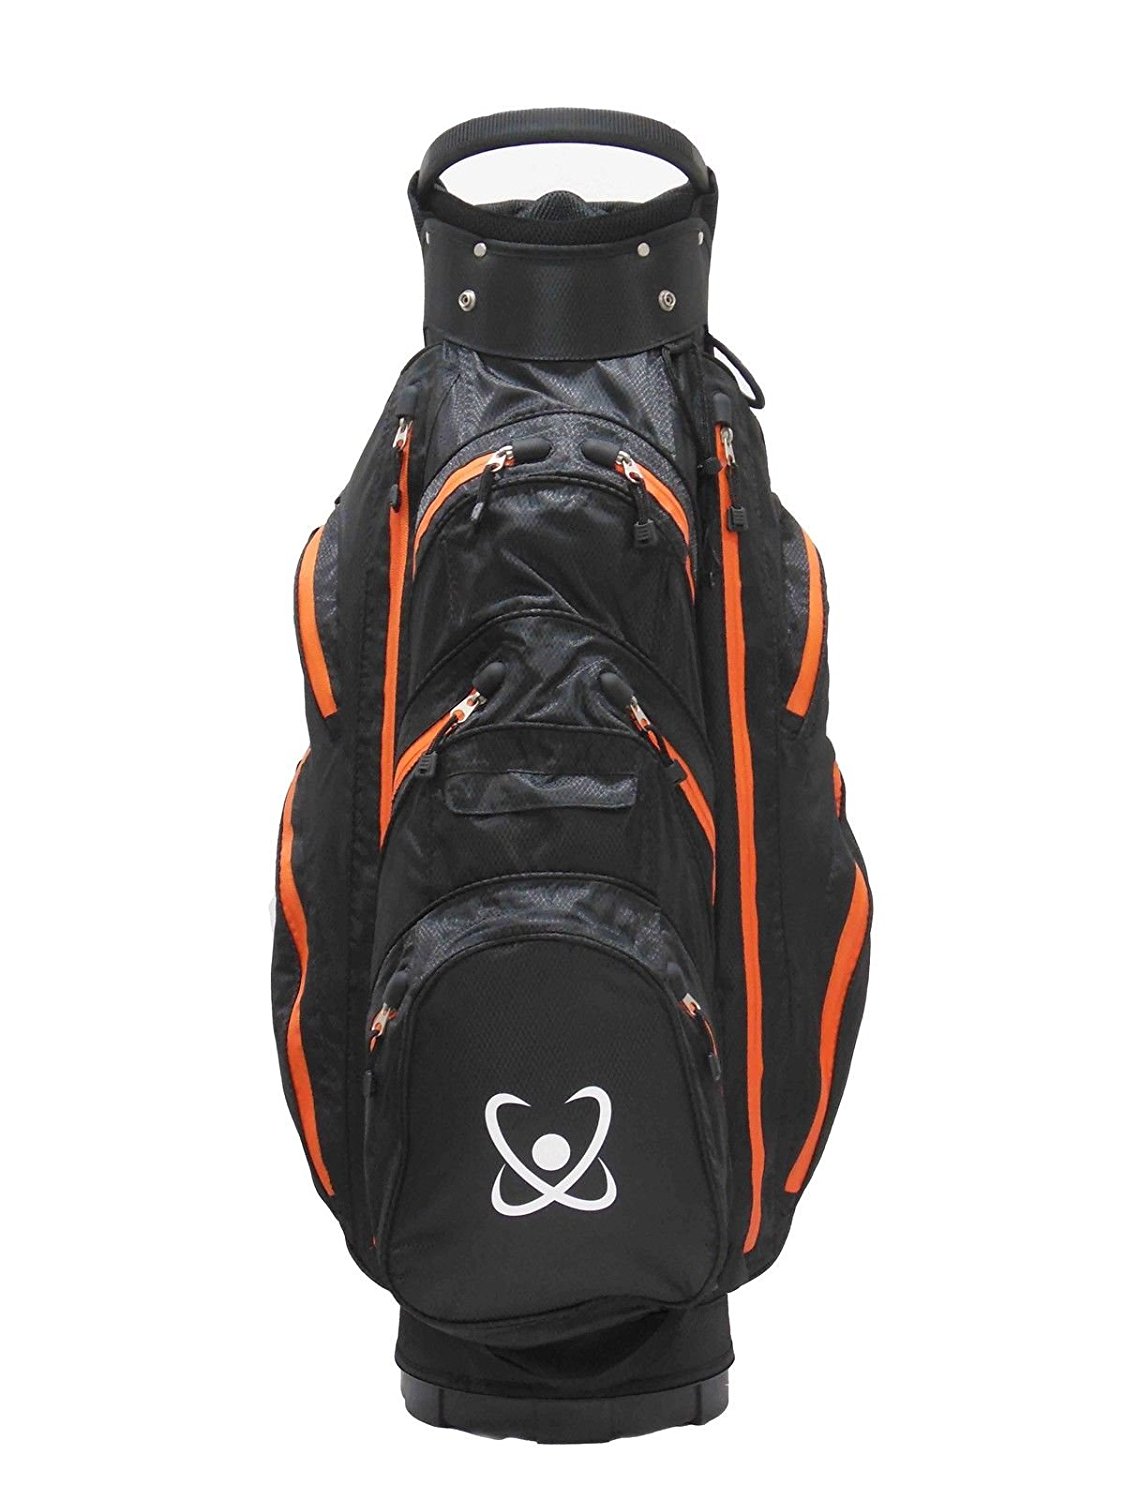 Waterproof lightweight Golf 14 Way divider Cart Bag 2016-17 stock Black/Orange | eBay